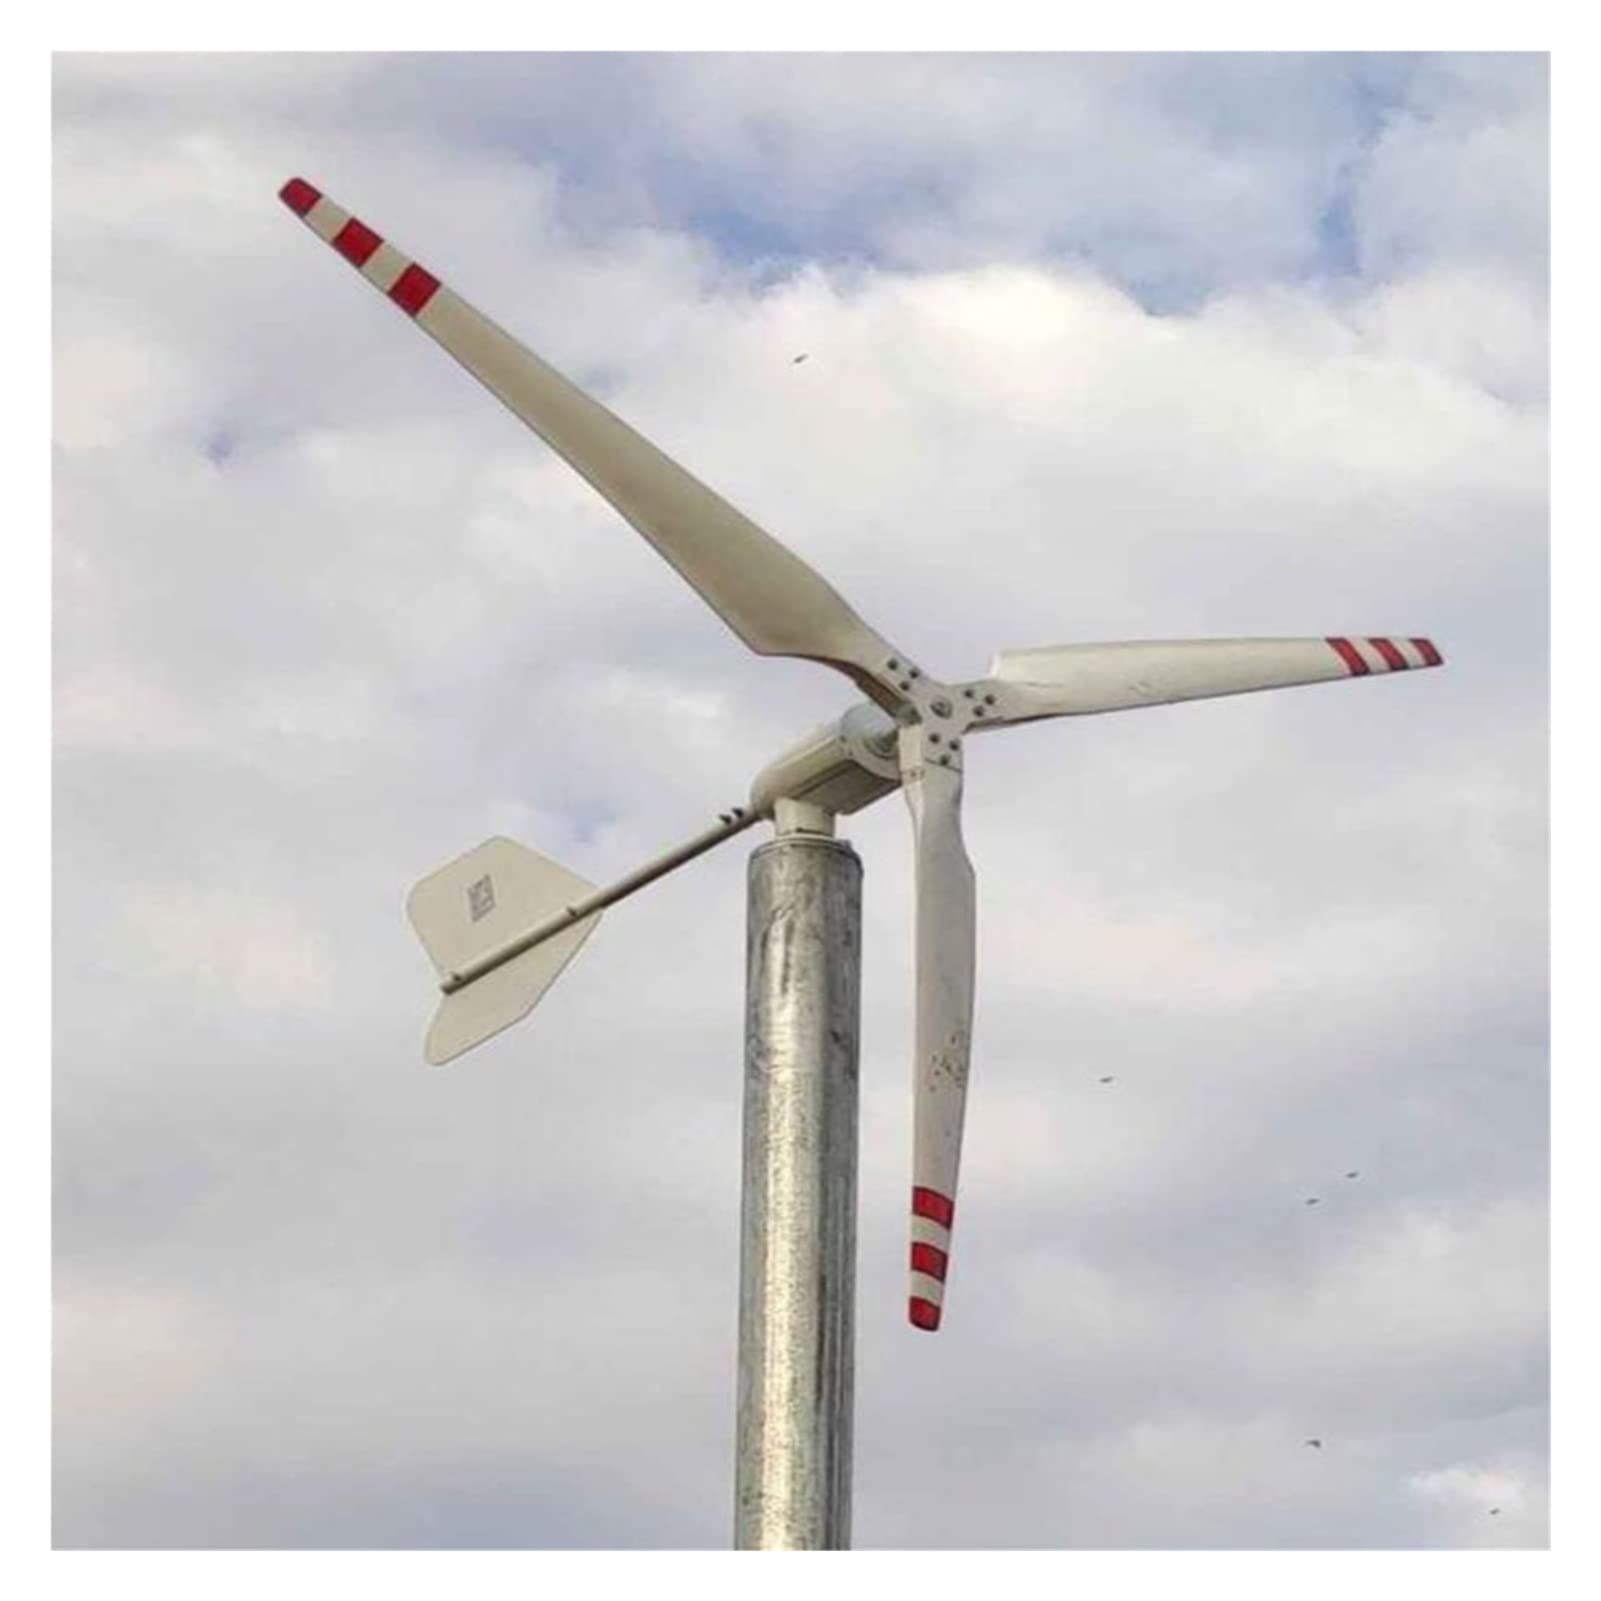 High Power Windmill, 2kw 24v 48v Wind Turbine Generator Horizontal Axis Wind Turbine MPPT Controller Off Grid Inverter Alternative Energy Suit for Hybrid Solar Wind System ( Color : Turbine Only , Siz